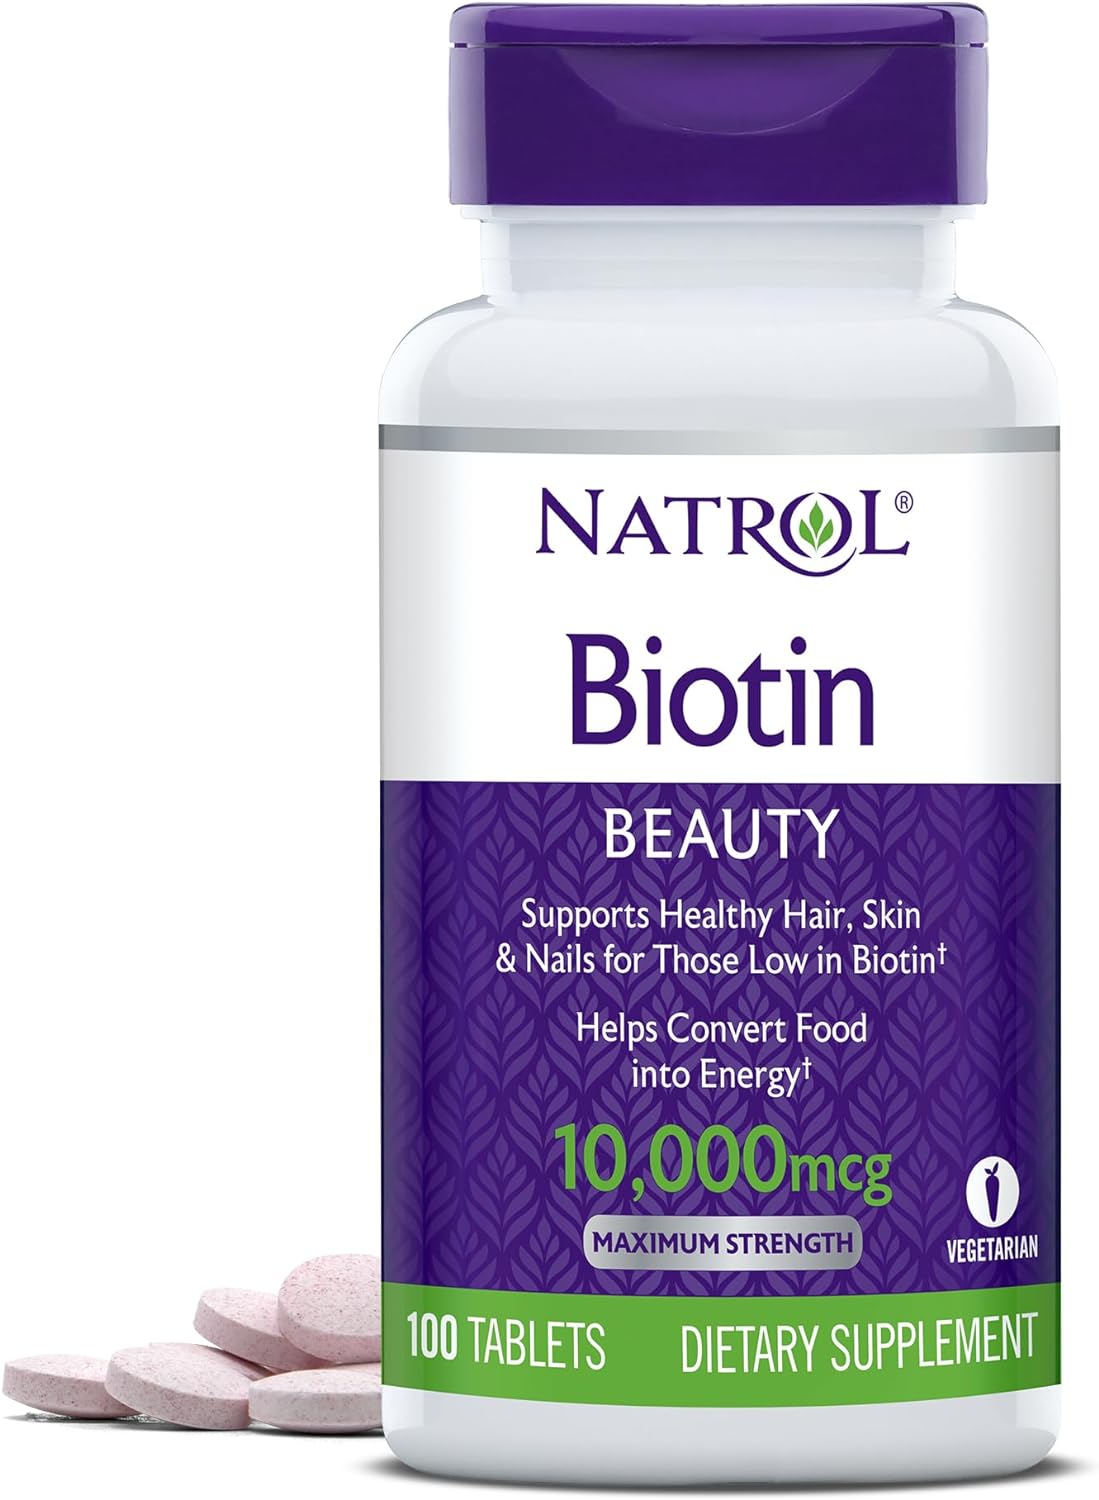 Natrol Biotin Beauty Tablets, Promotes Healthy Hair, Skin and Nails, Maximum Strength, 10,000mcg, 10